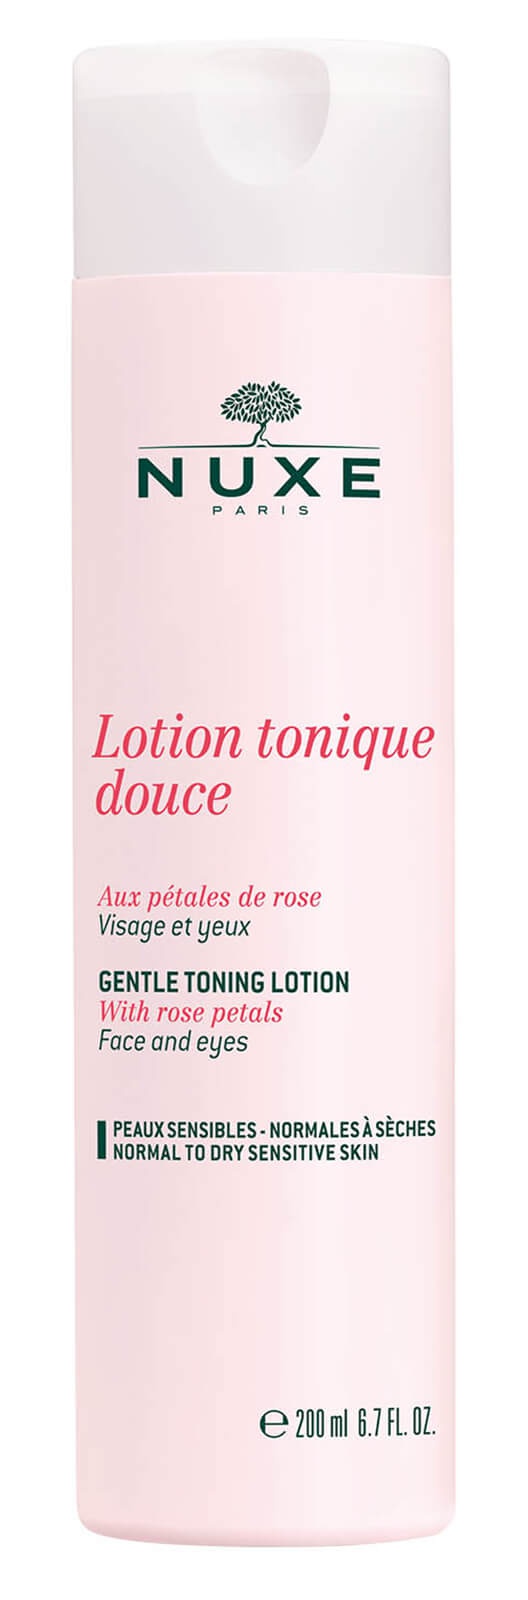 Nuxe Lotion Tonique Douce Gentle Toning Lotion